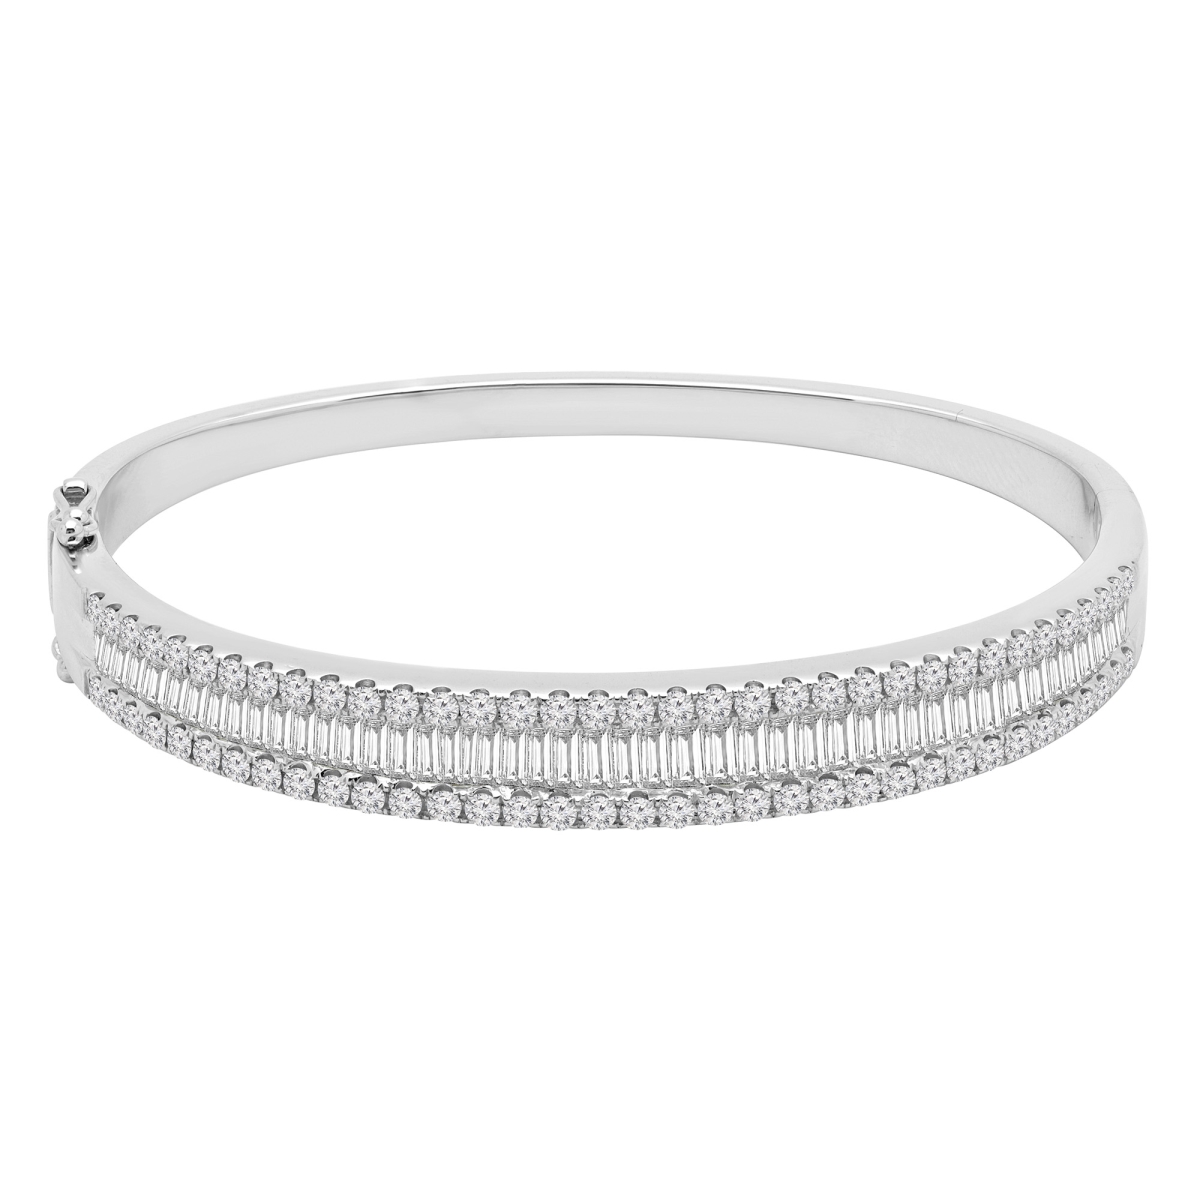 Md190295 3.8 Ctw Baguette Diamond Three-row Bangle Bracelet In 18k White Gold